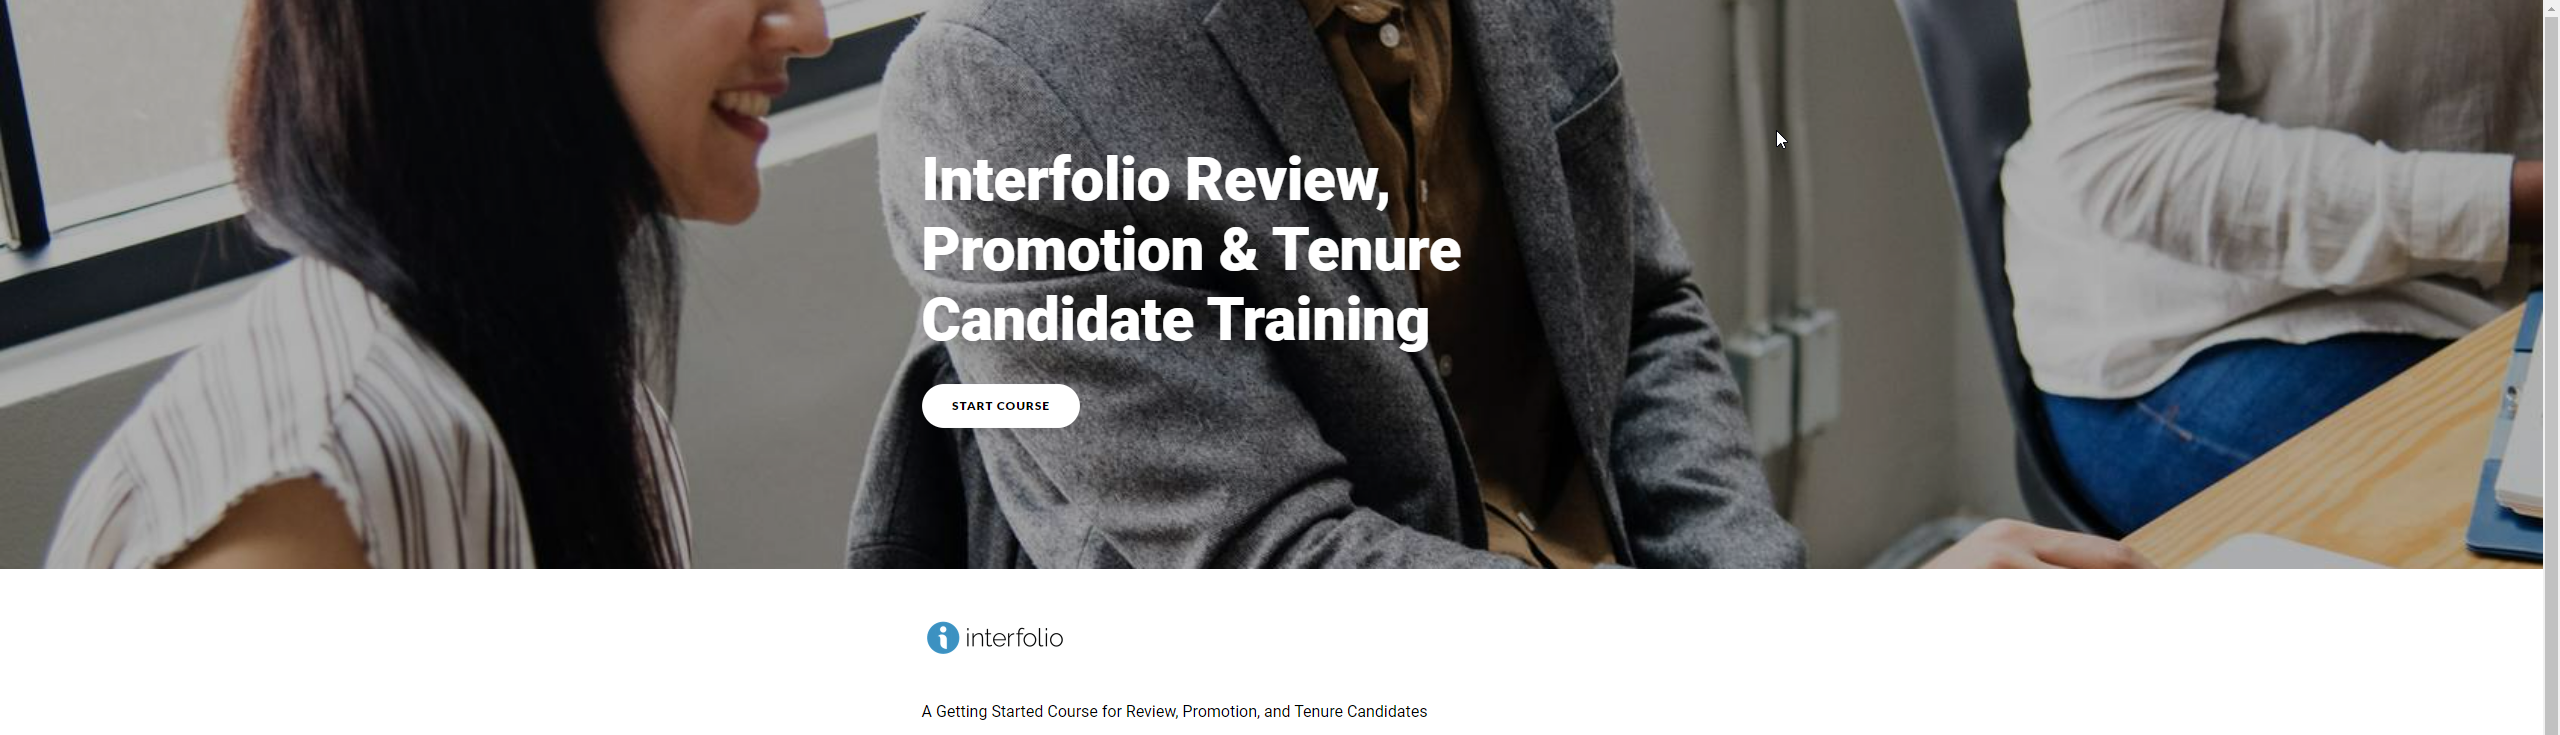 RPT Candidate Training powered by Interfolio